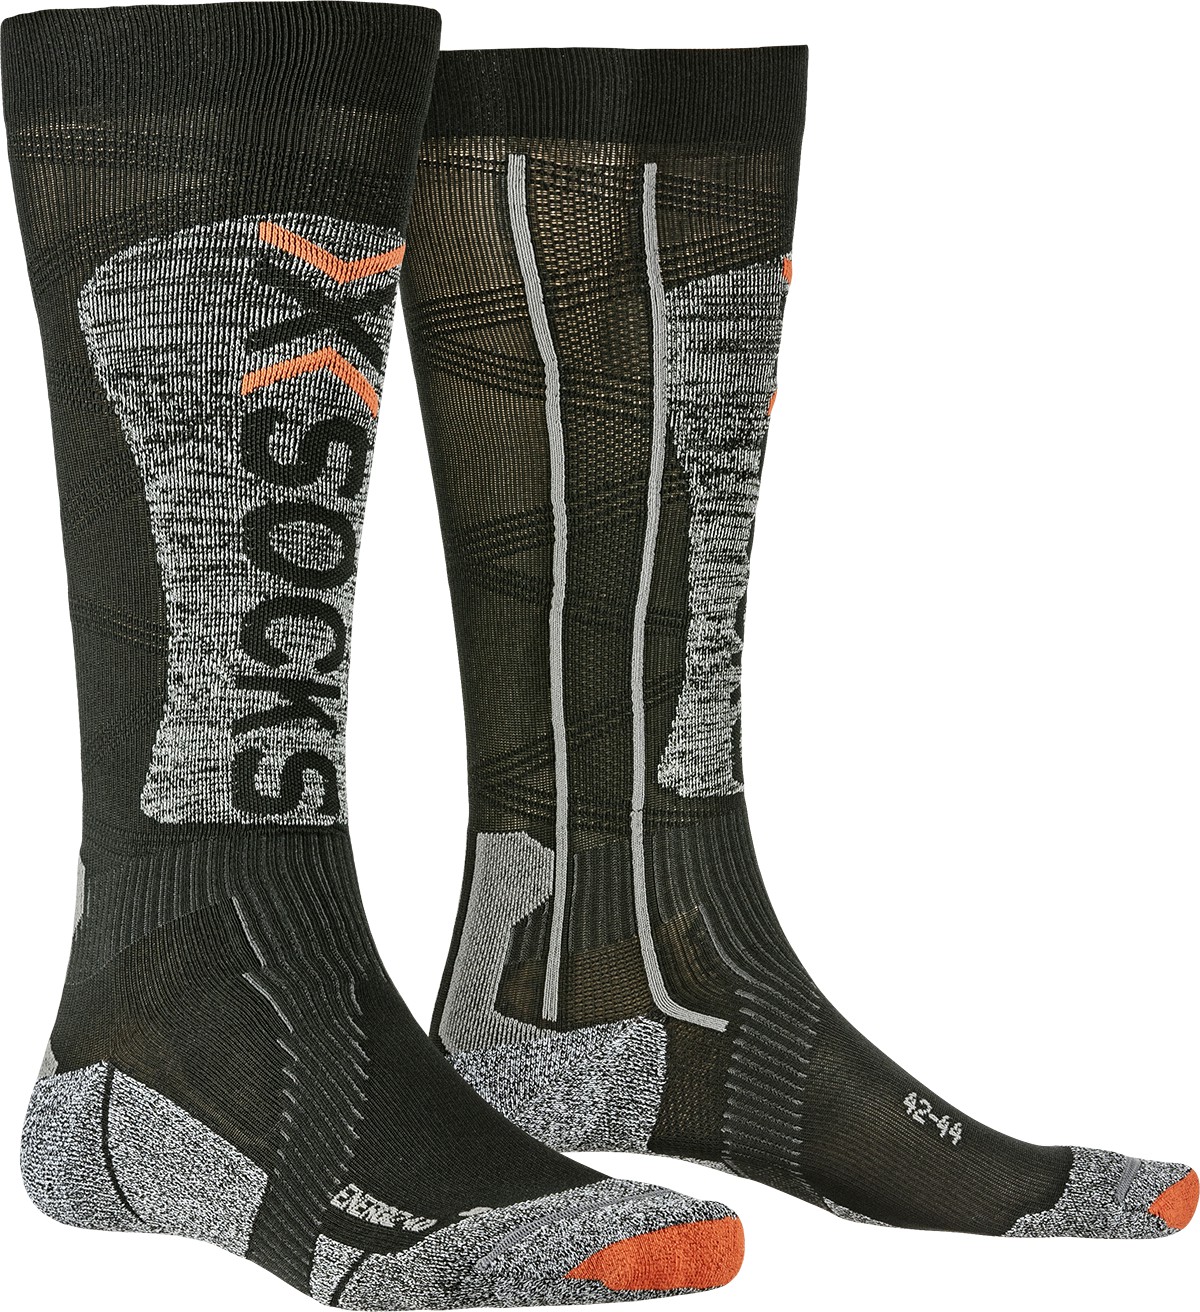 X-socks Ski Energizer Lt 4.0 black/grey